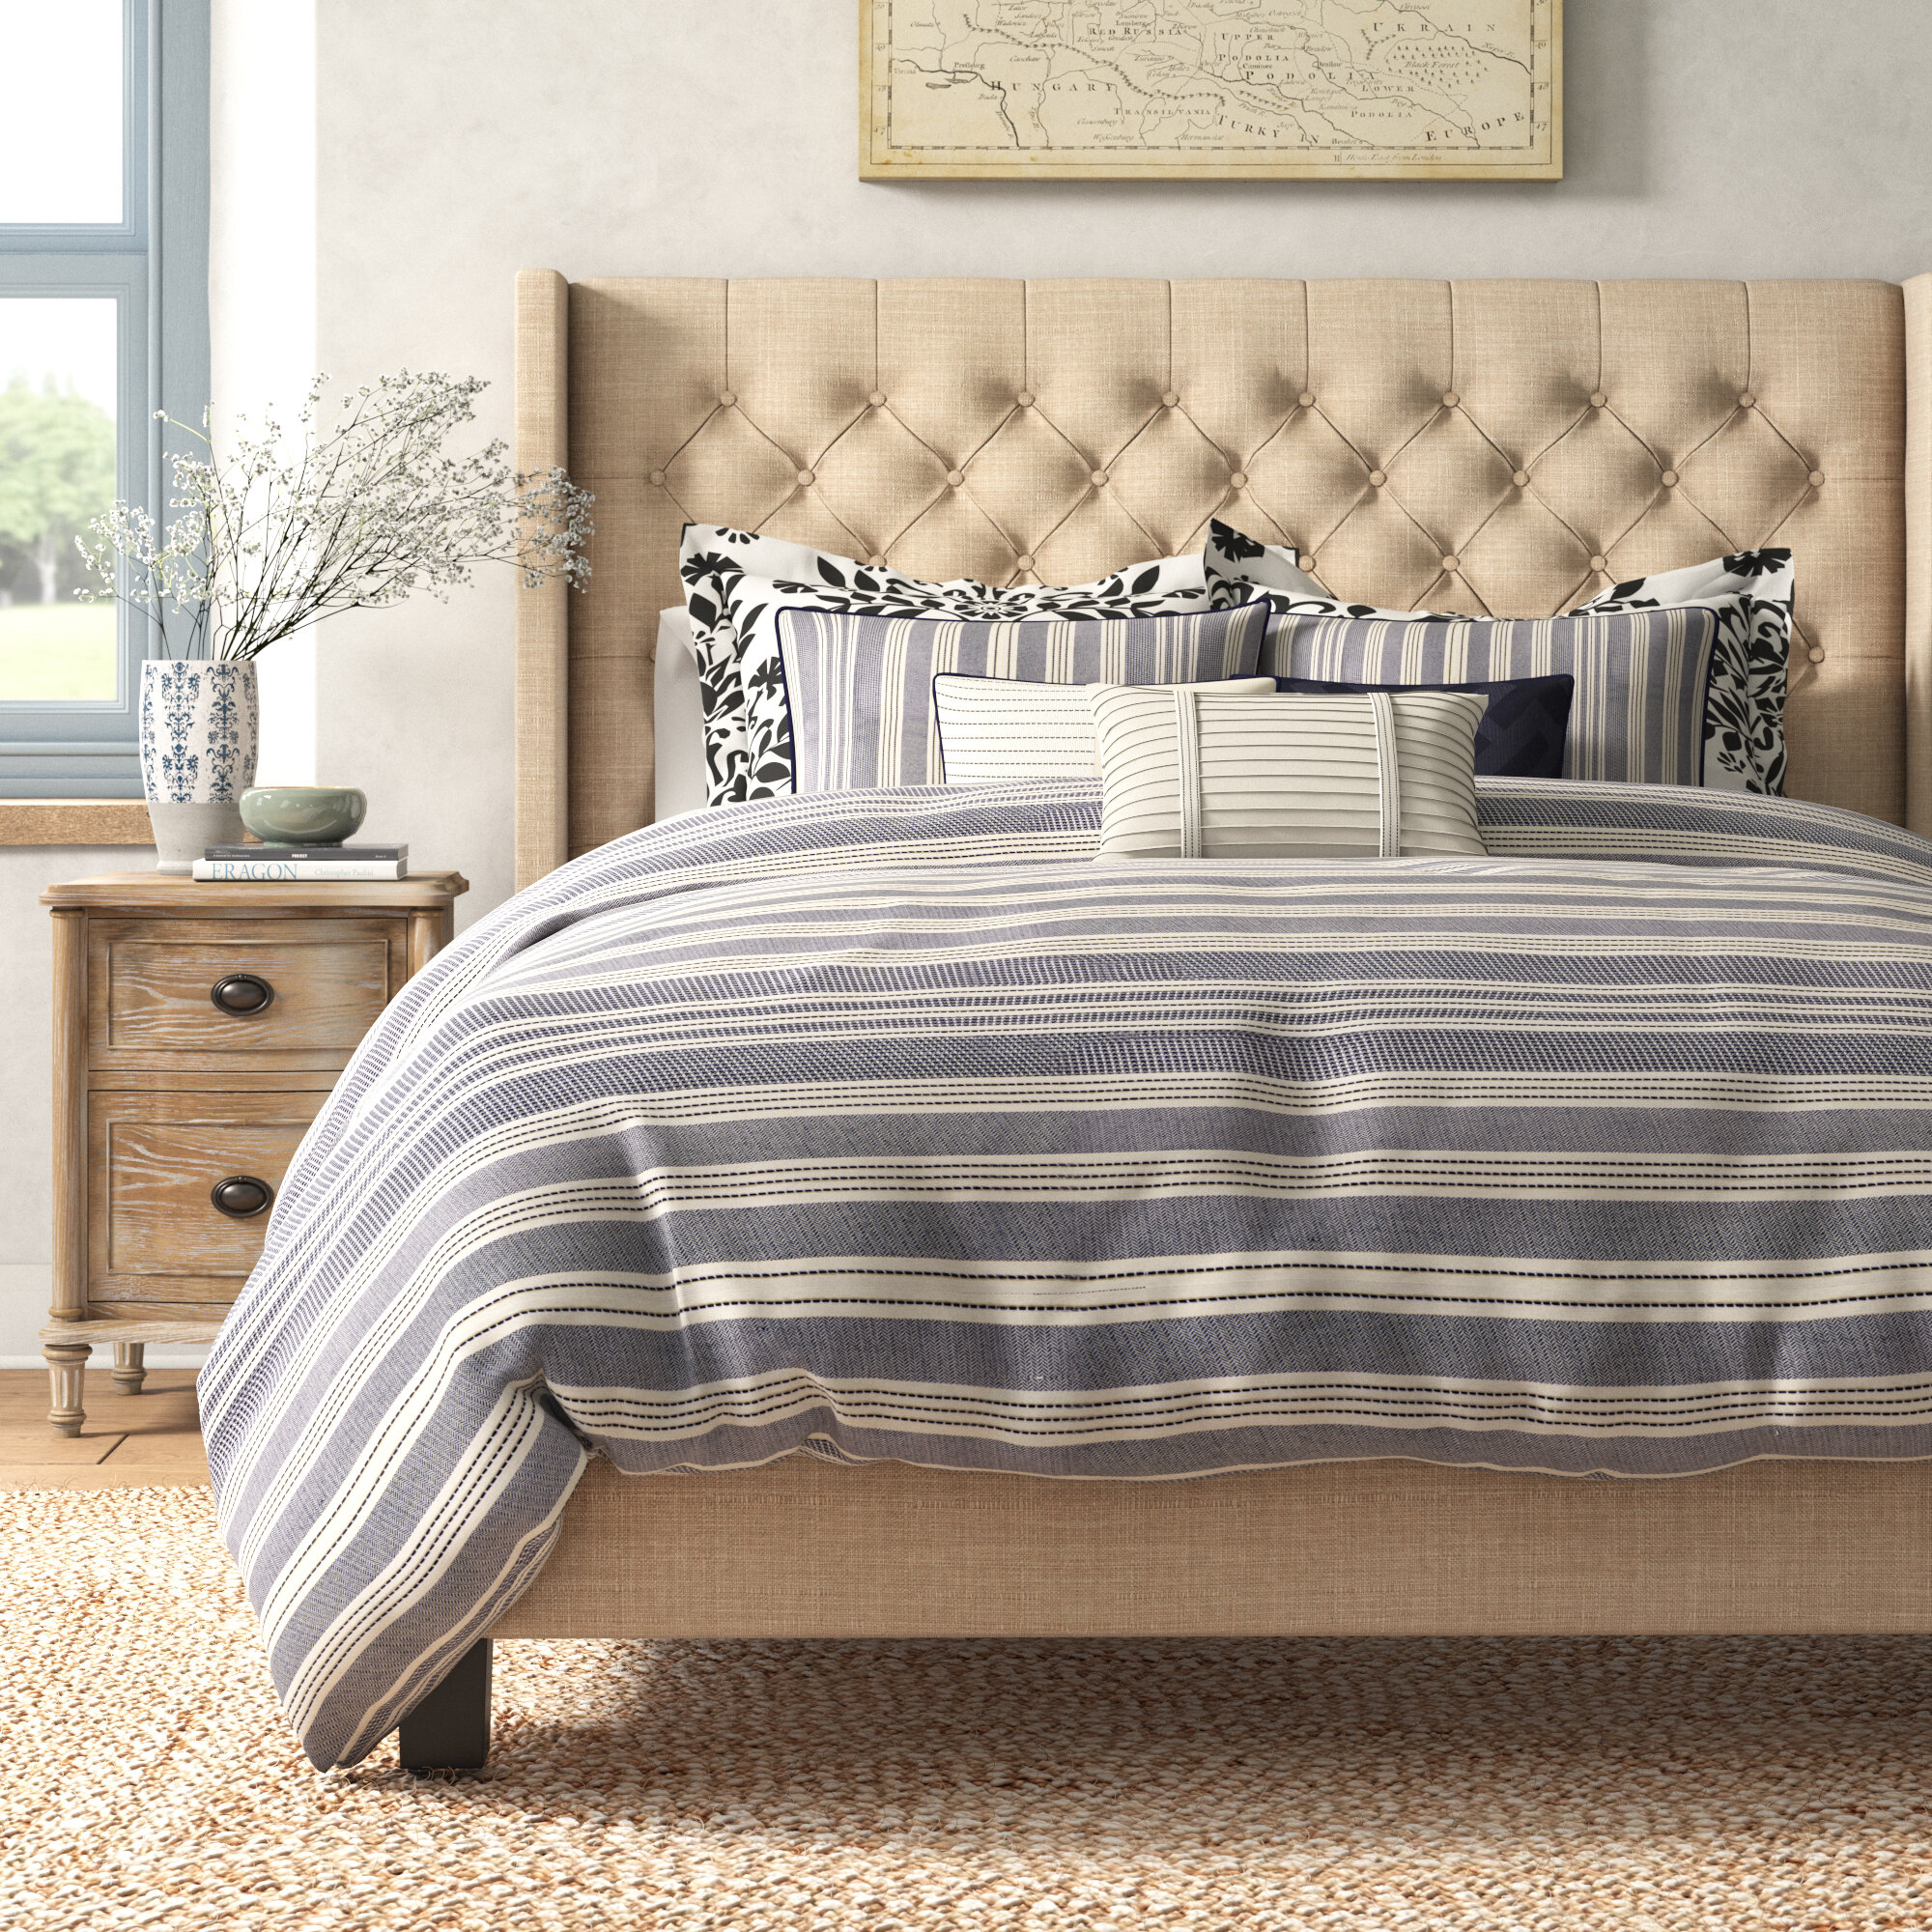 Farmhouse Bluewhite Cotton Blend Modern Contemporary Comforter Set 